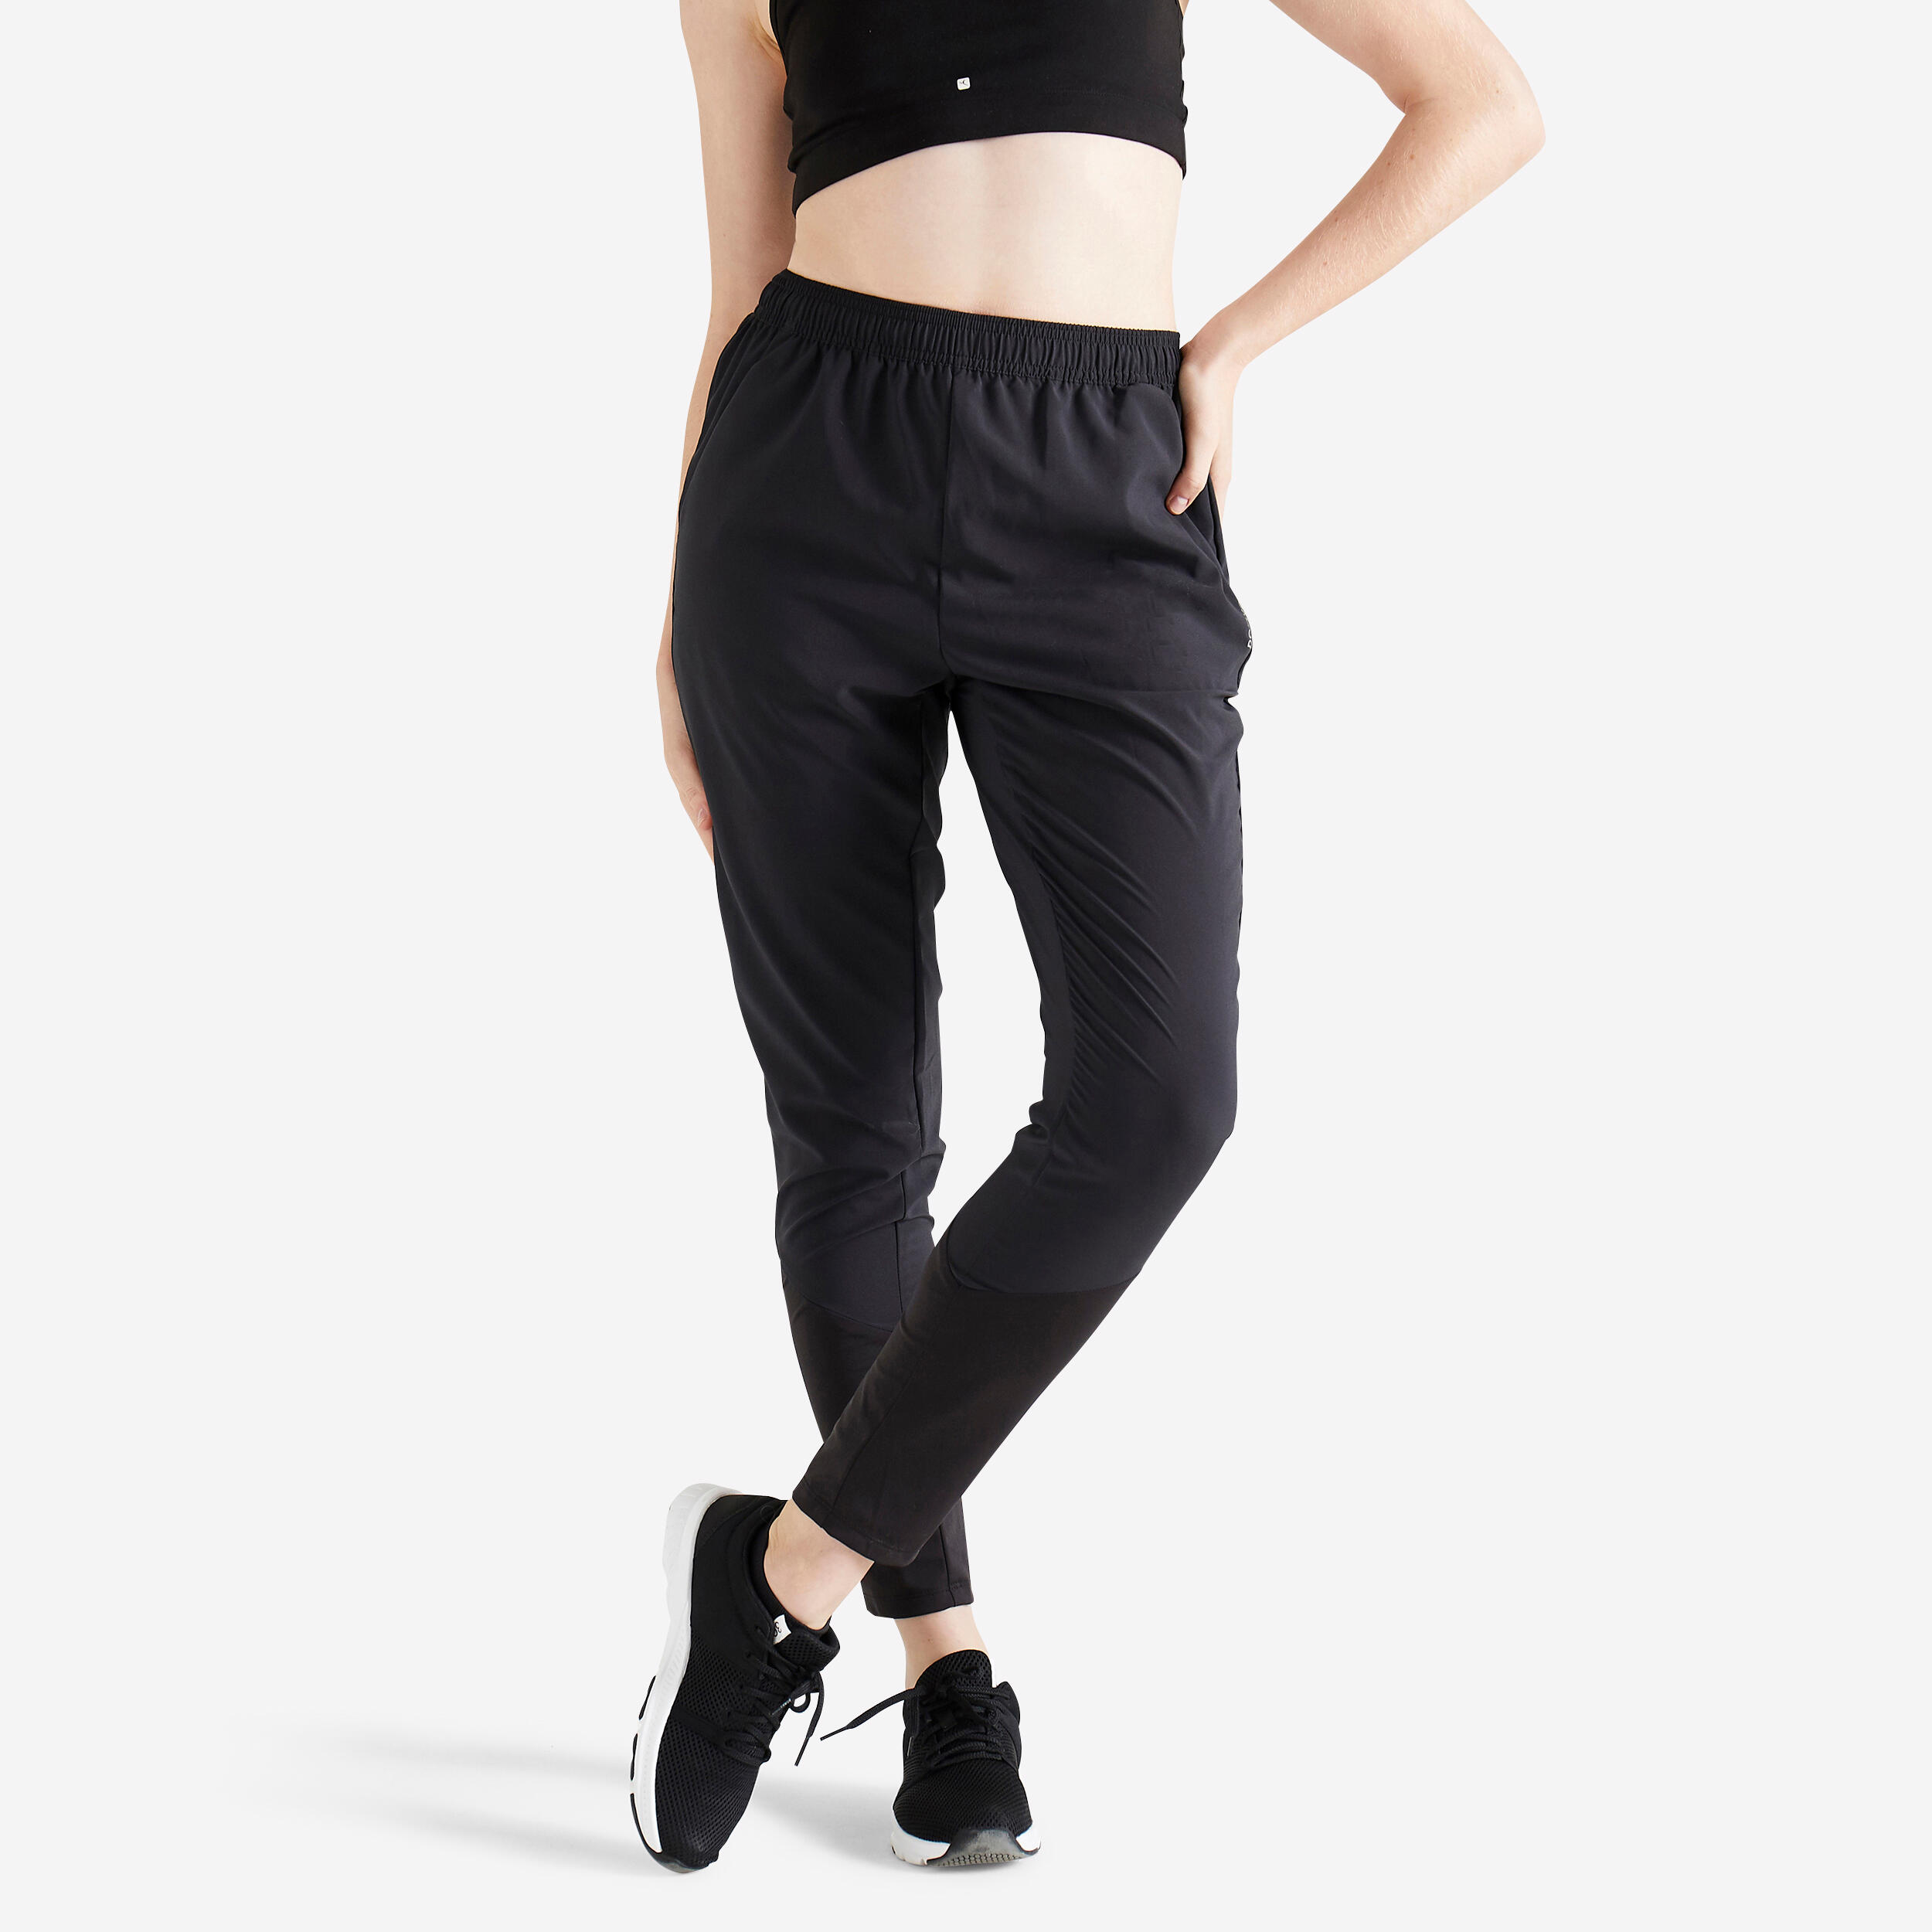 black domyos track pants SOLD OUT ❌ black adidas track pants SOLD OUT ❌  beige parachute pants SOLD OUT ❌ blue Nike track pants SOLD... | Instagram